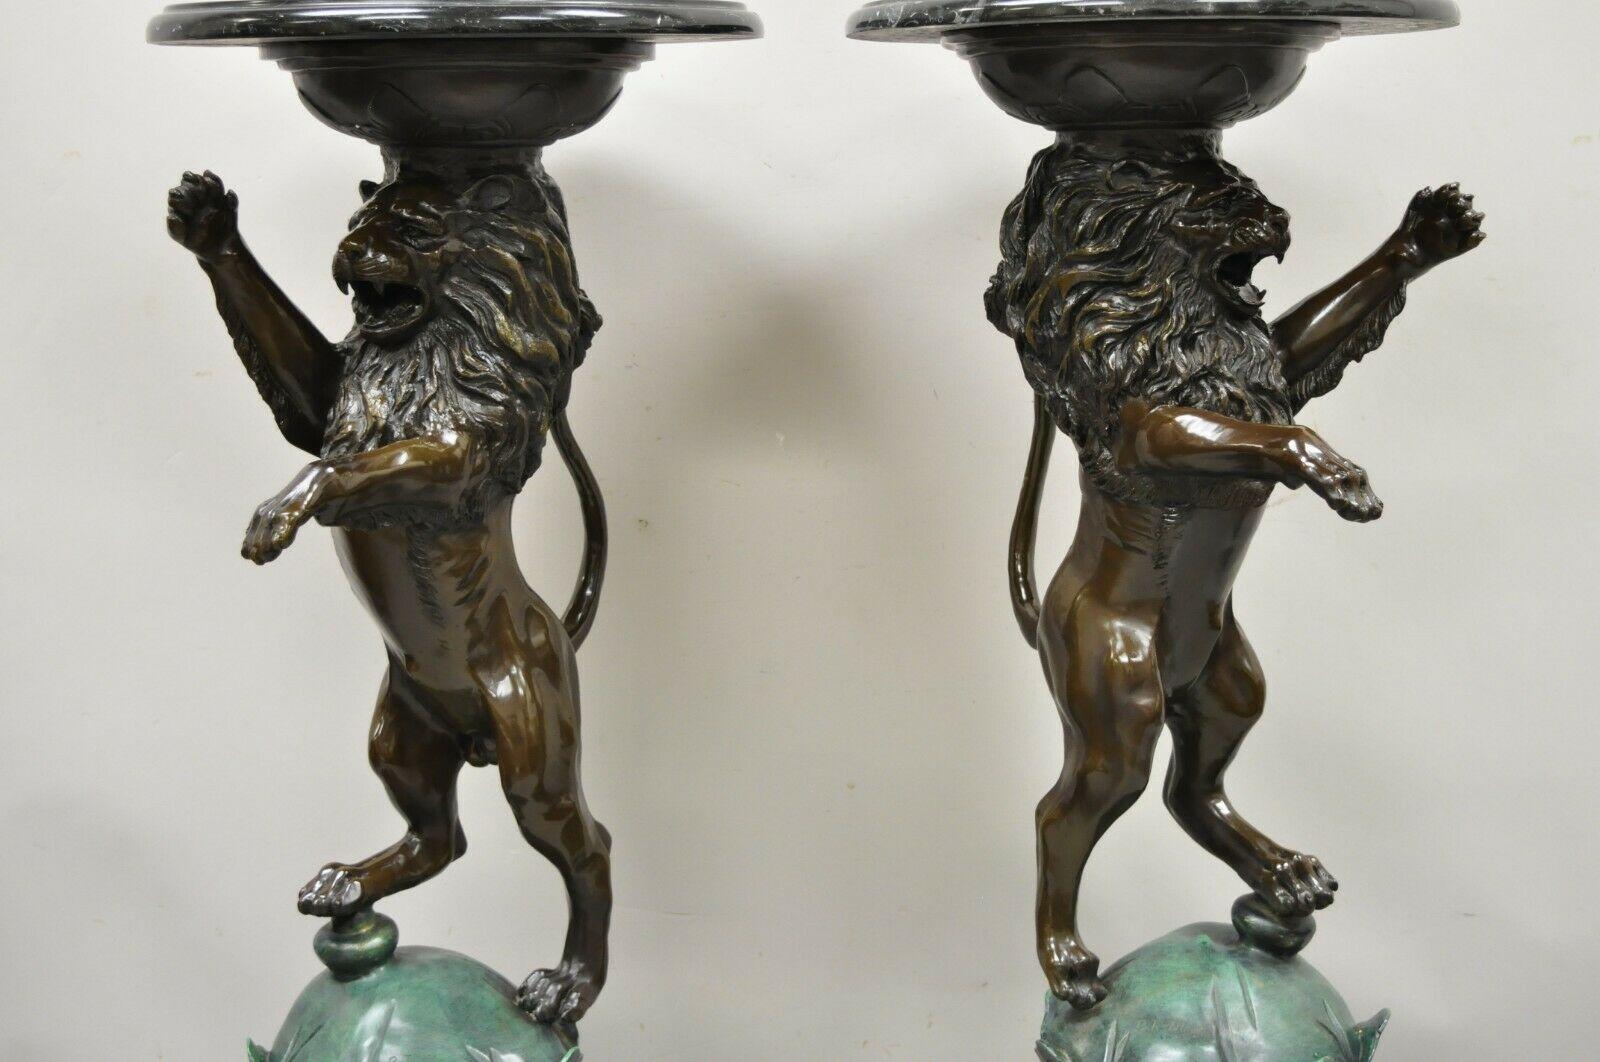 Cast bronze figural lion sculpture marble top pedestals after P.J Mene - a Pair. Item features right and left forms, heavy cast bronze lion figures, round black marble tops, signed 